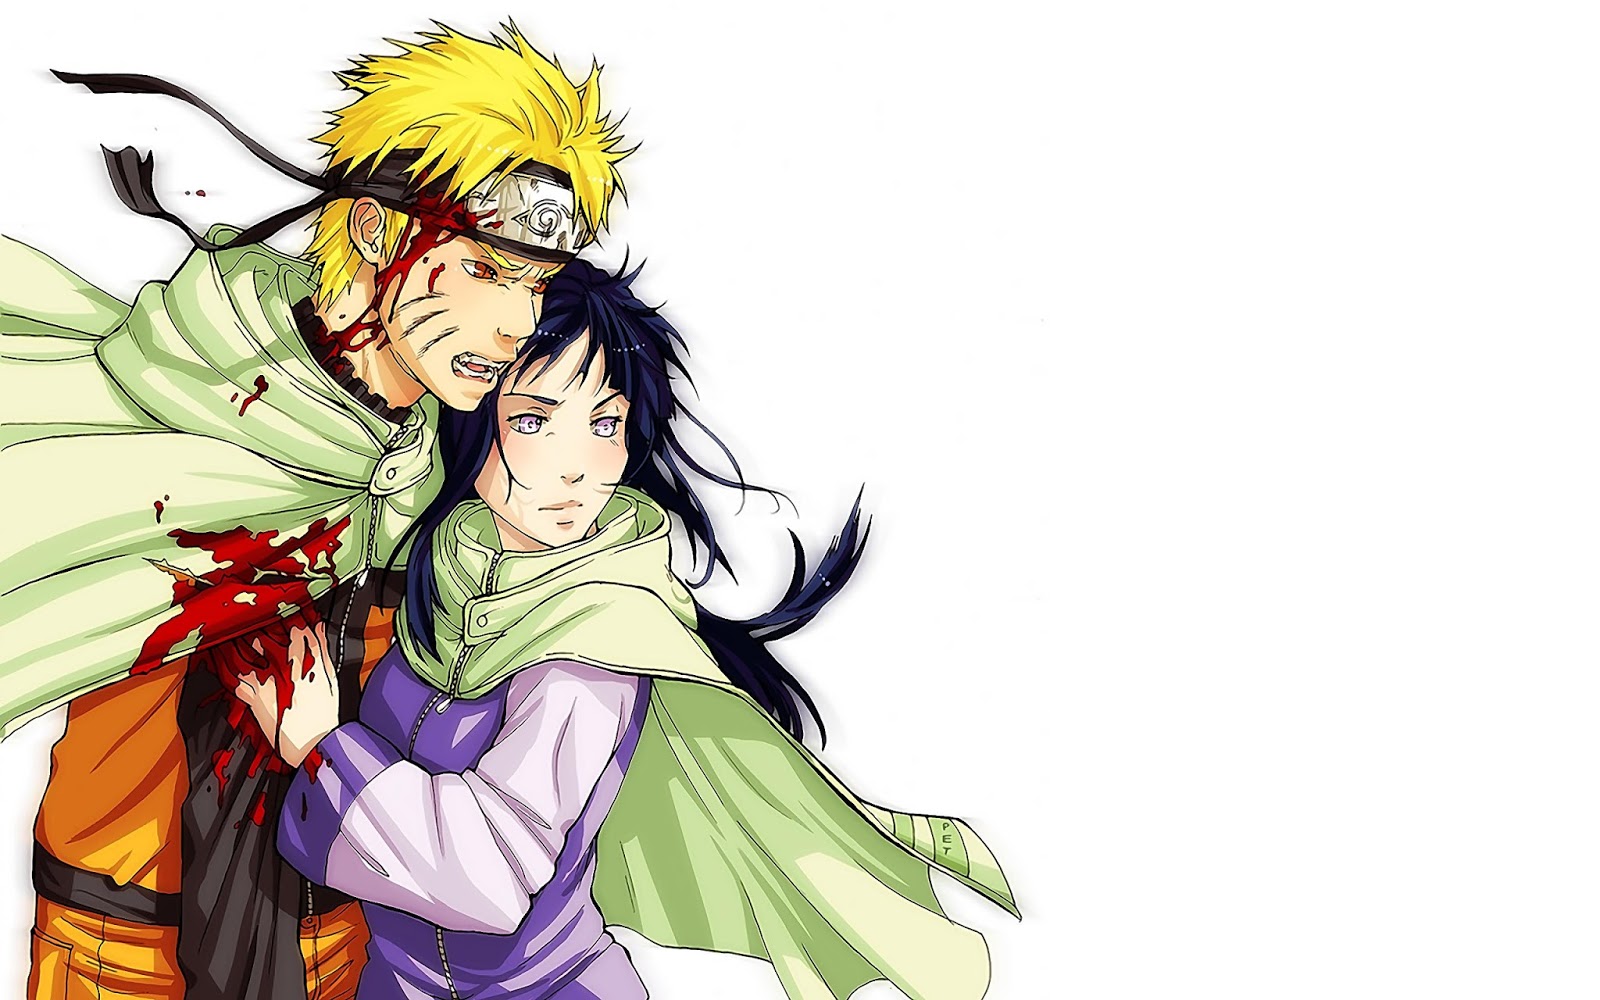 Wallpaper Naruto Dan Hinata Romantis Kumpulan Tips Dan Trik Menarik